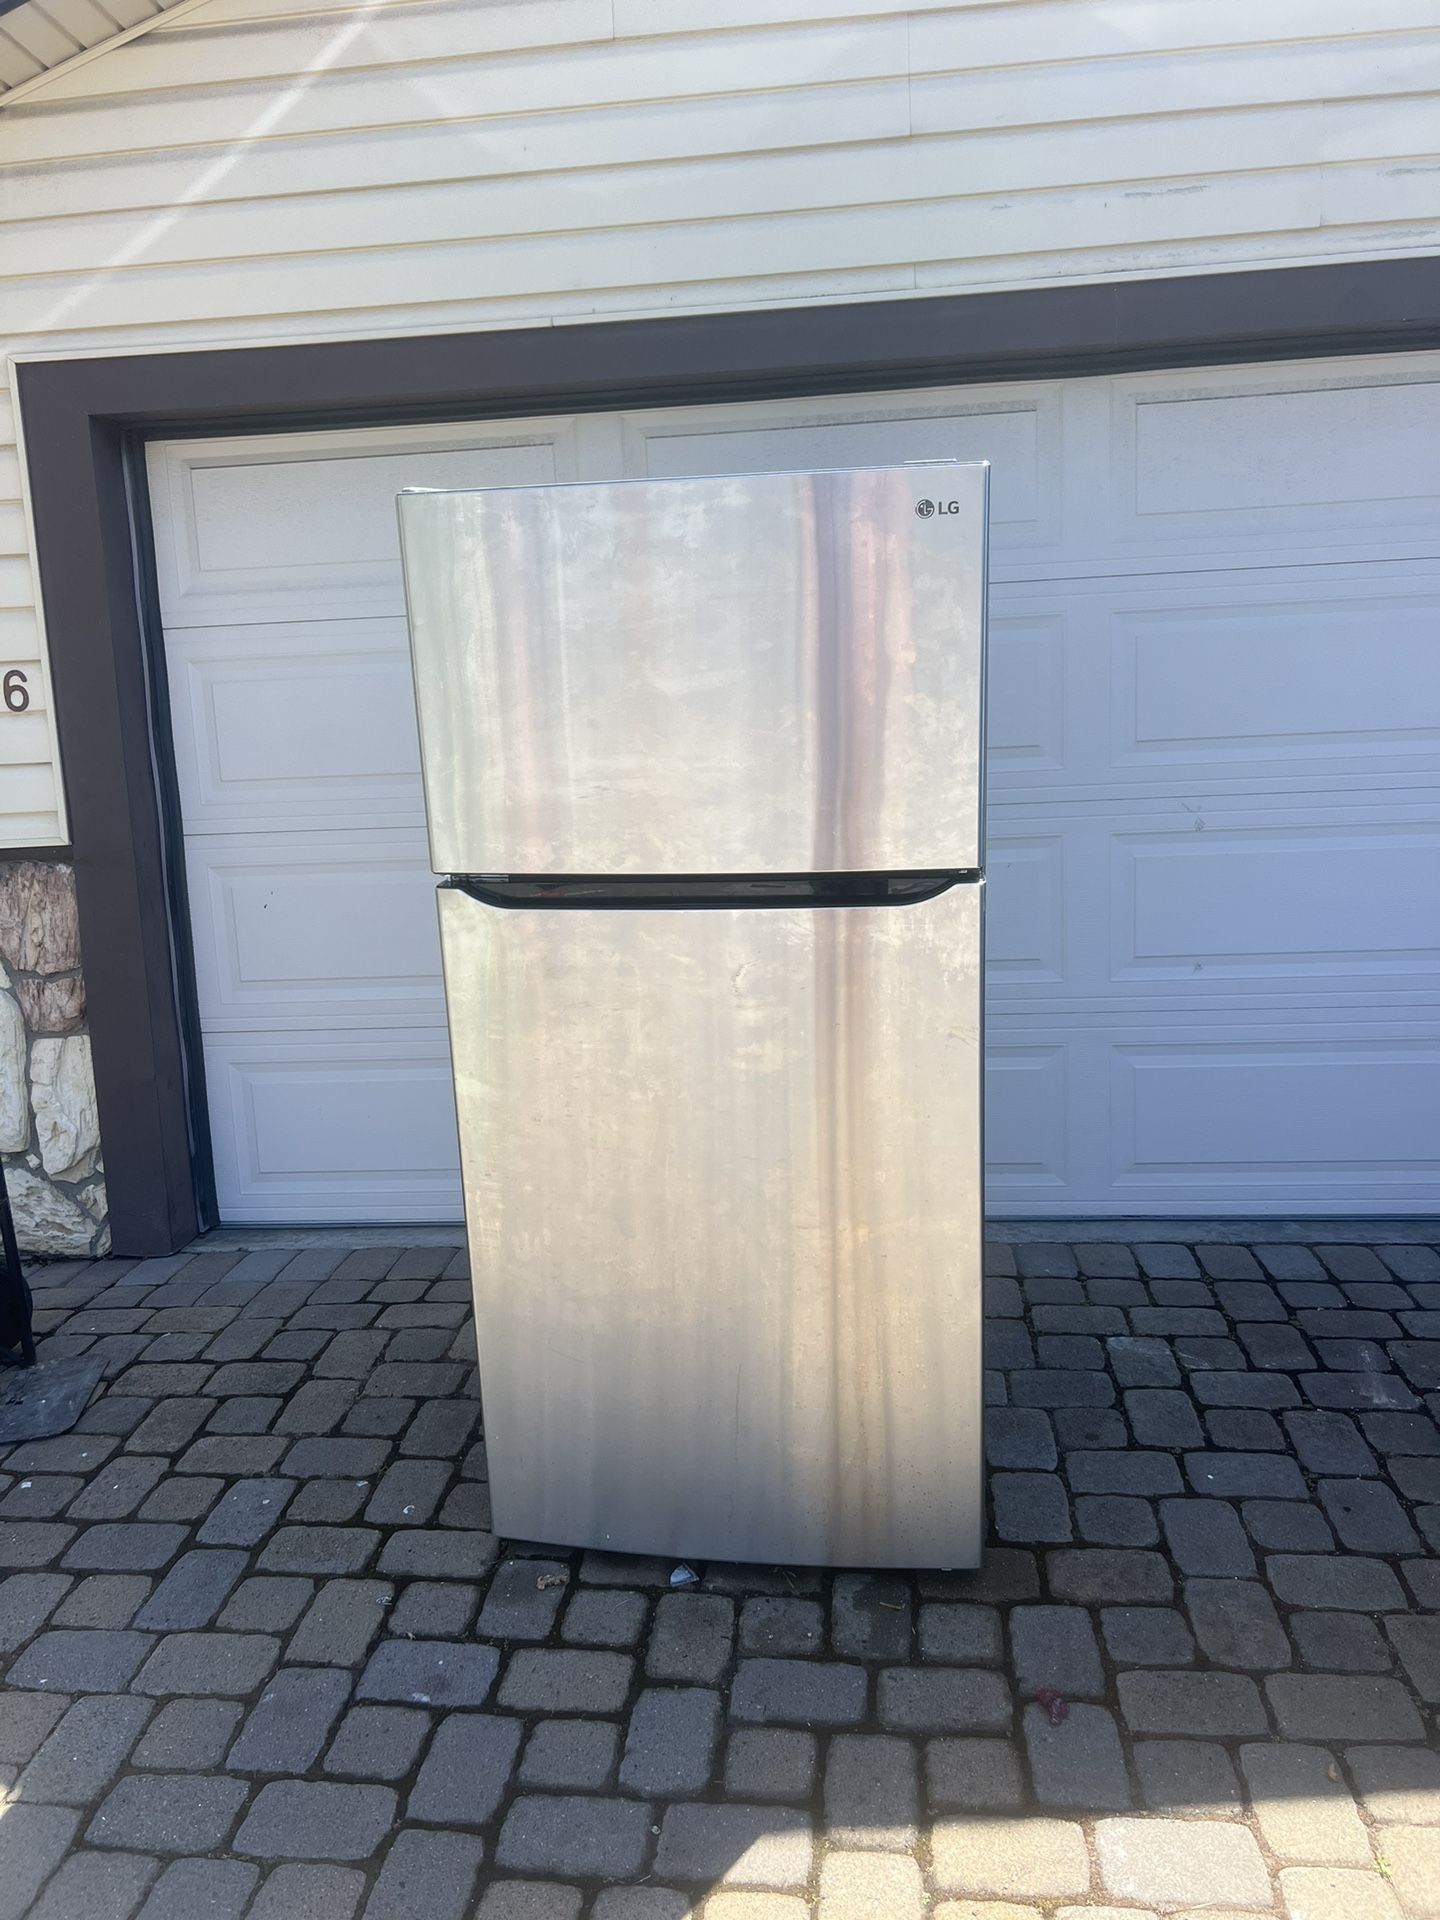 LG Refrigerator With Icemaker